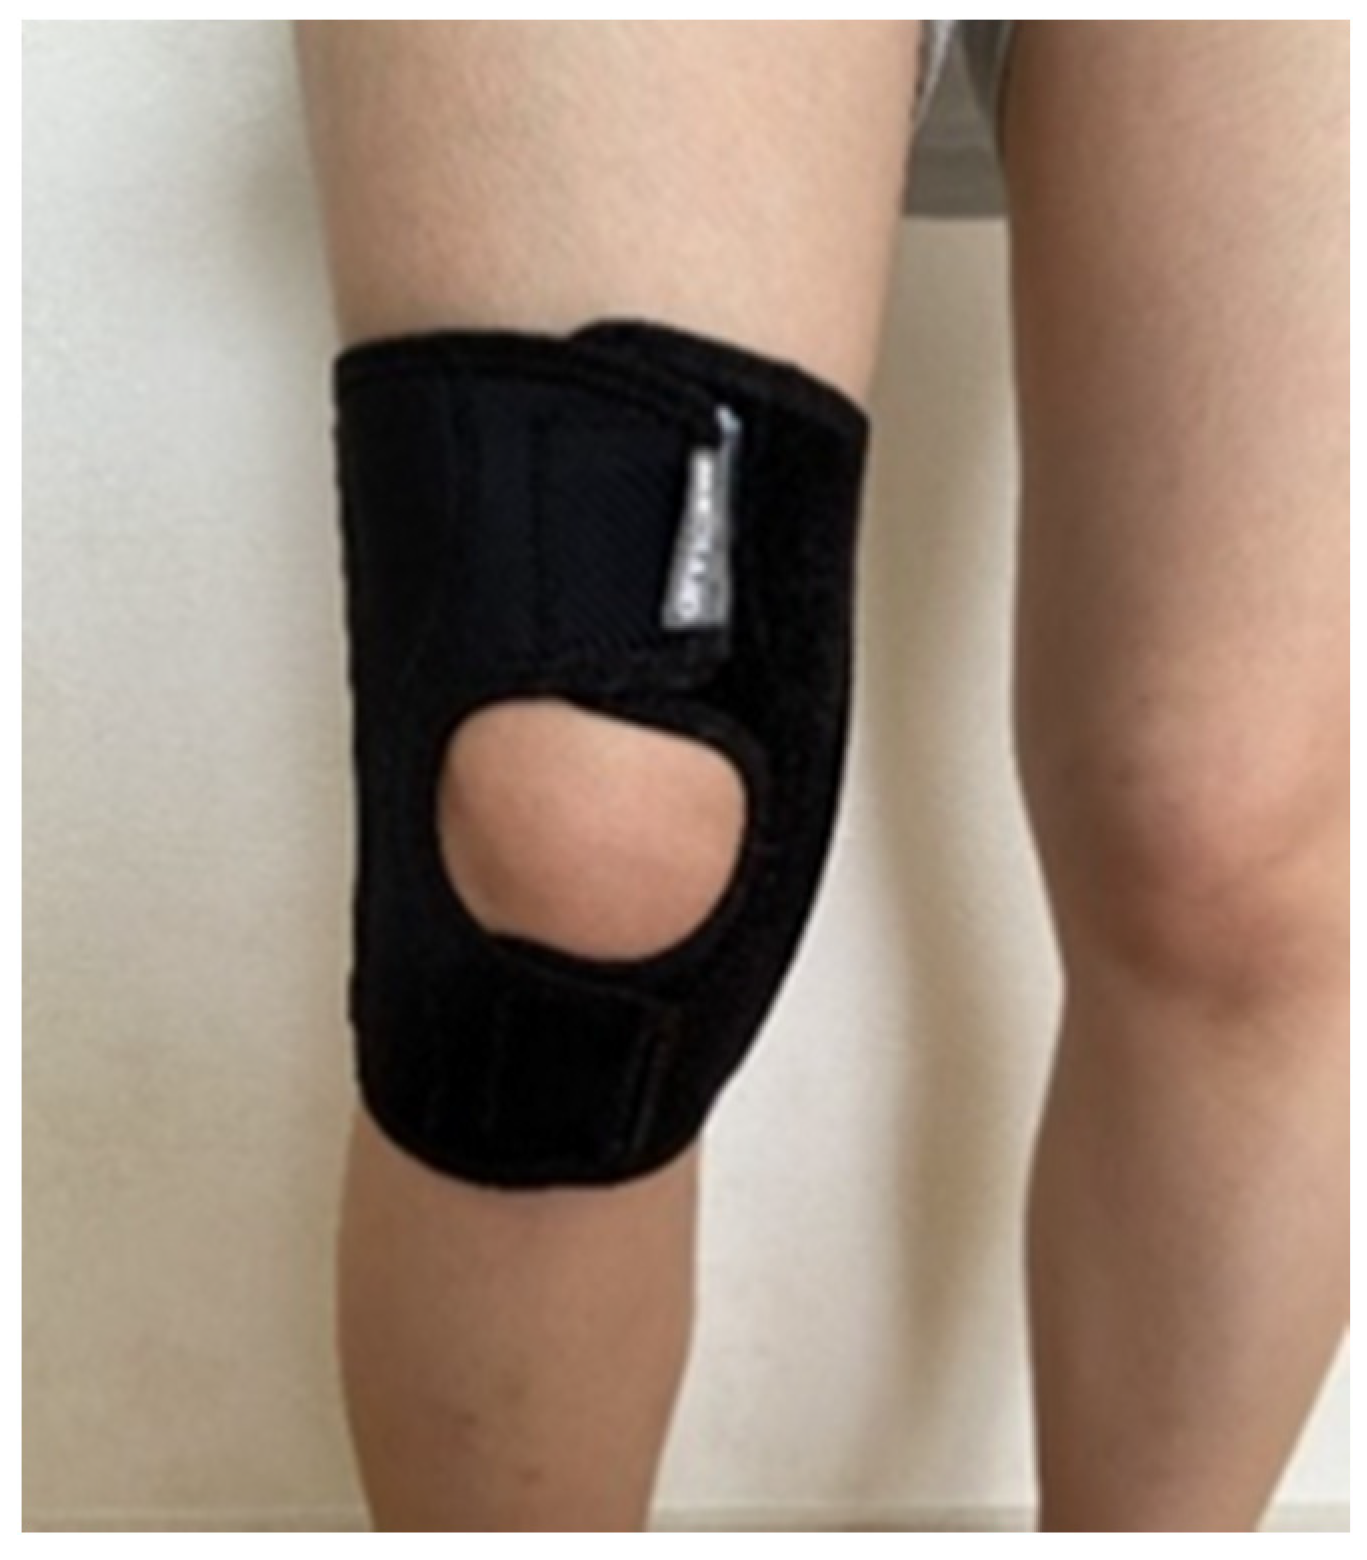 Neoprene Pull On Patella Knee Sleeve with Positive Control Distal